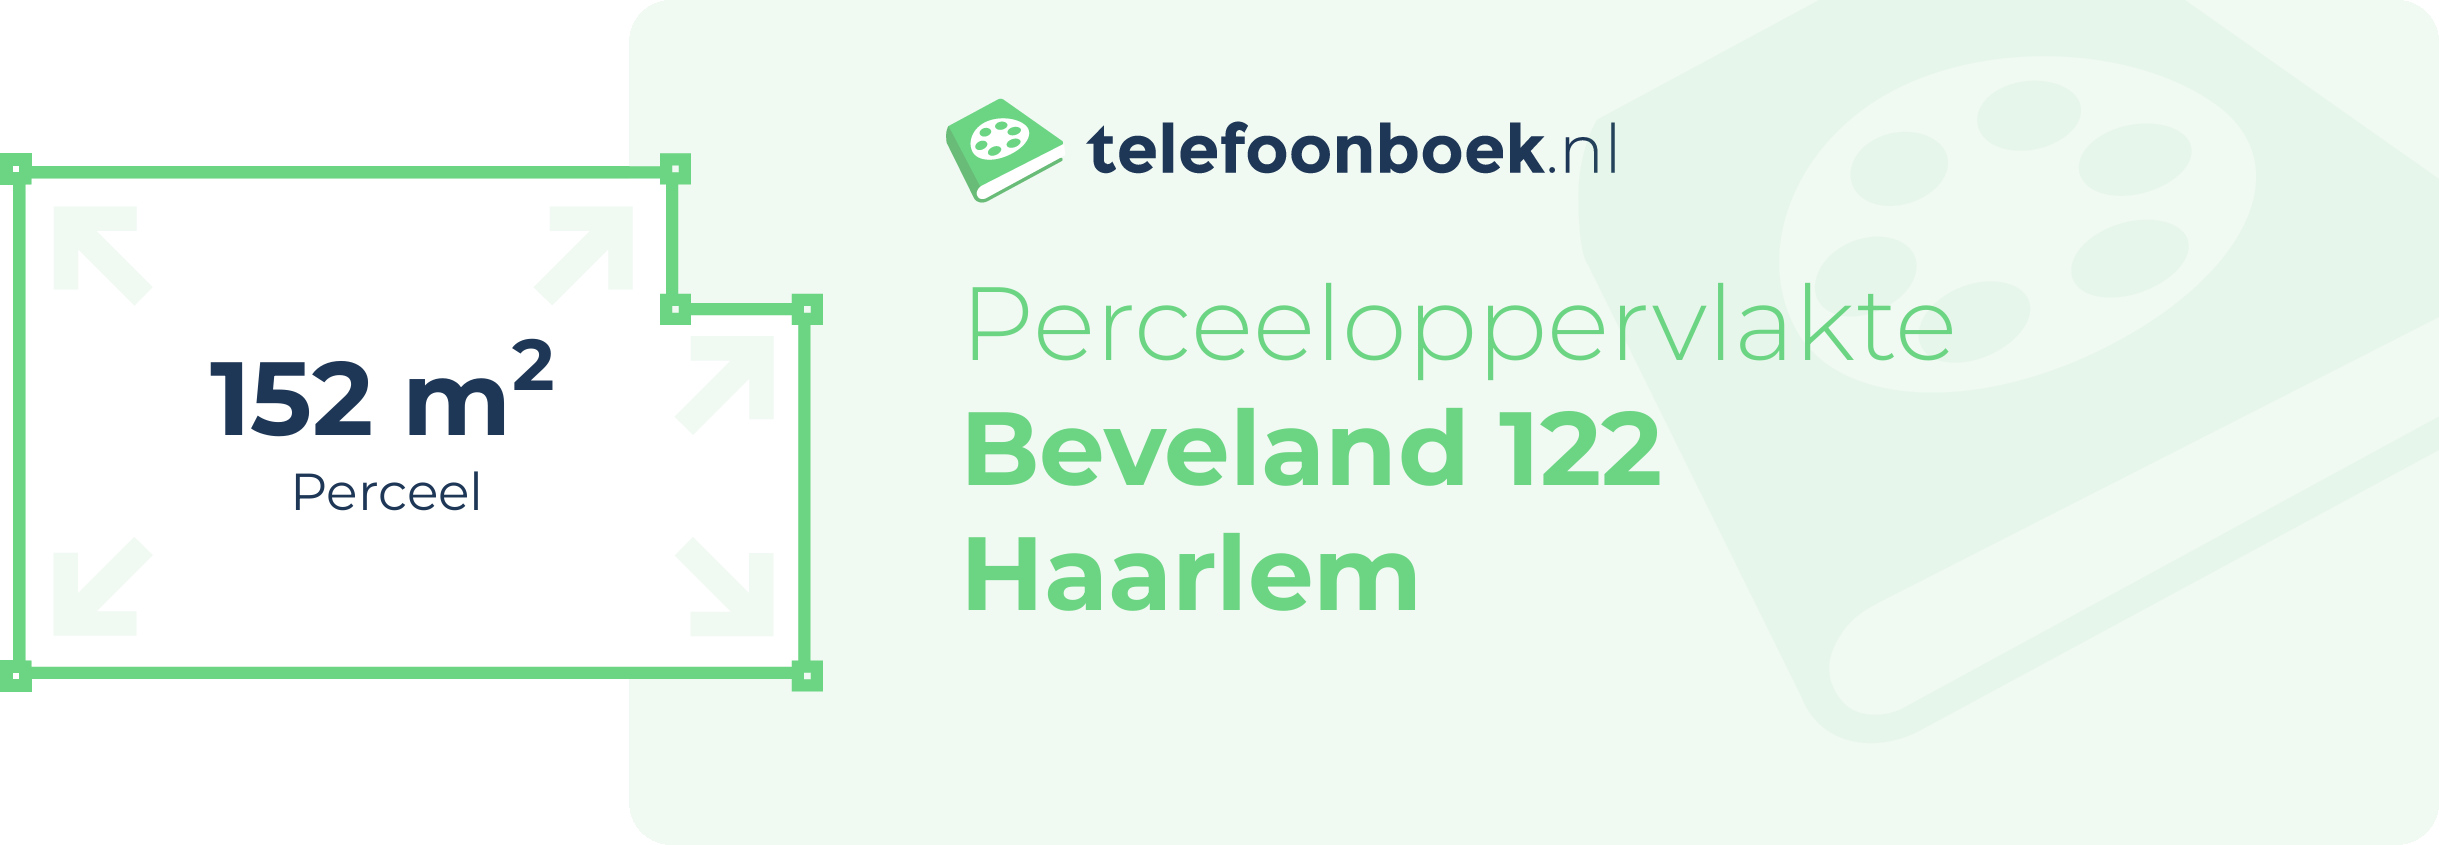 Perceeloppervlakte Beveland 122 Haarlem